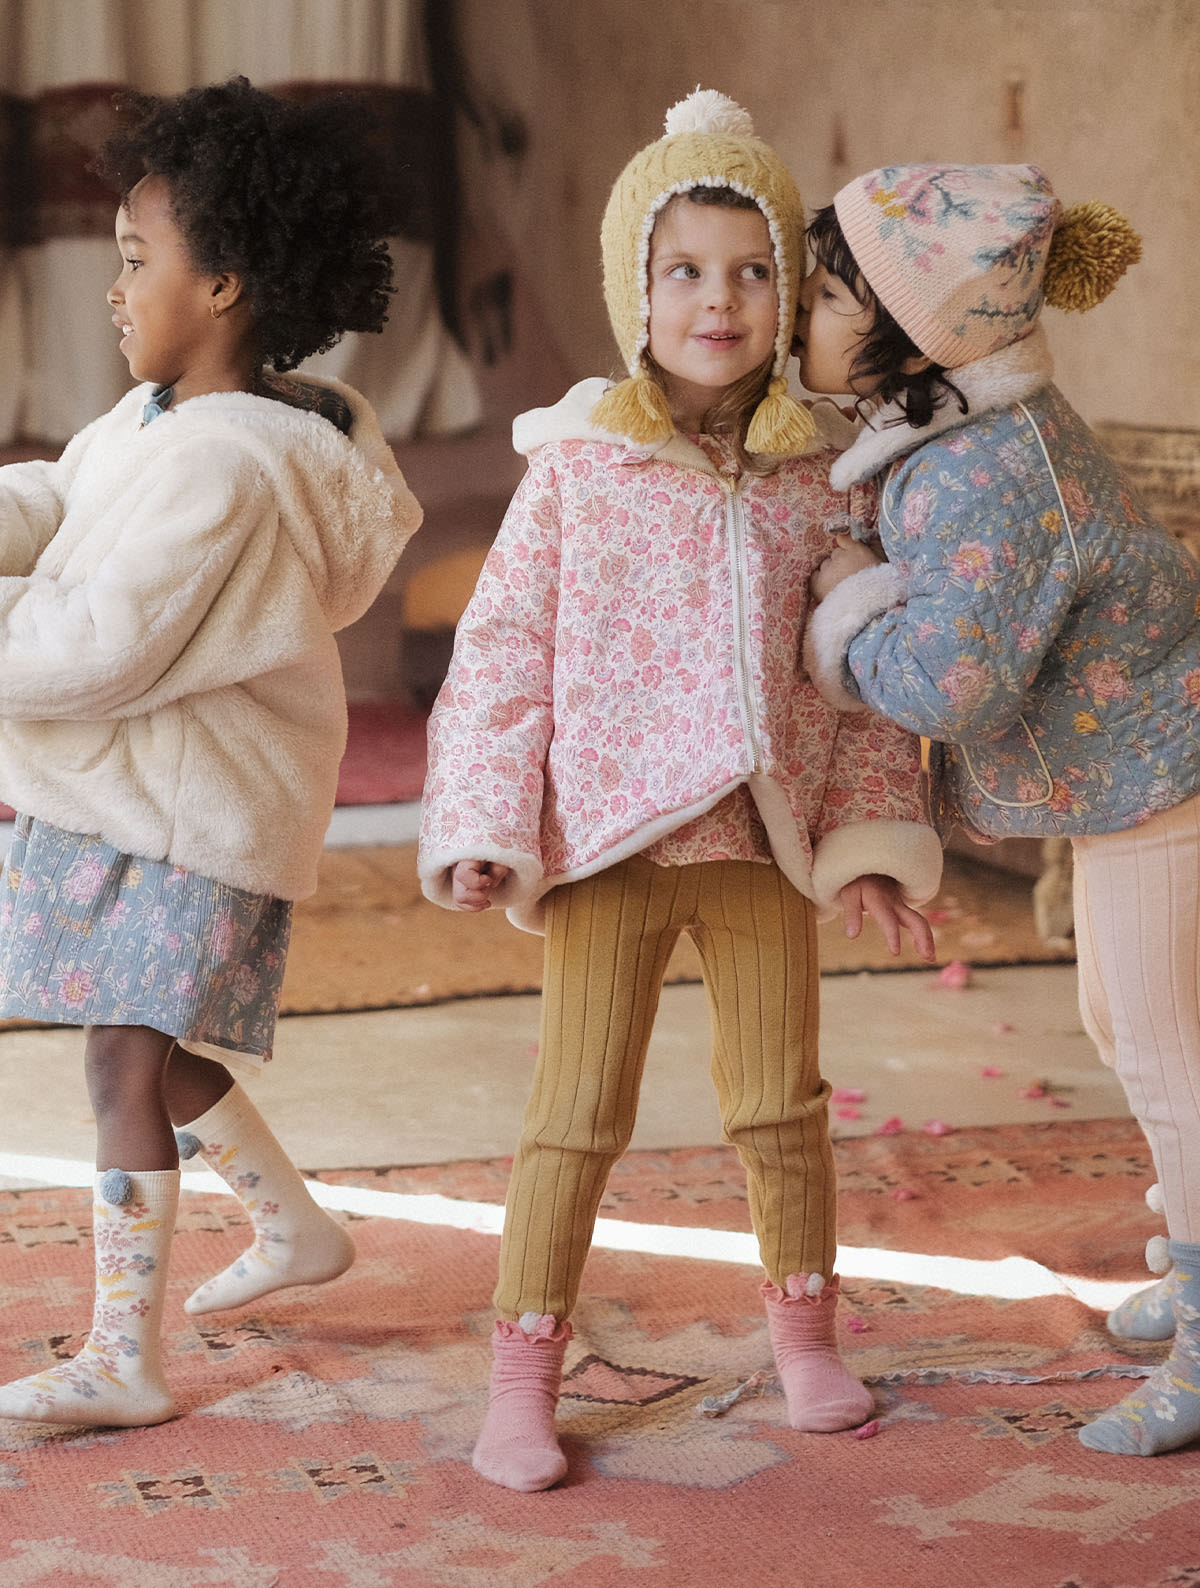 Sonia Rykiel Enfant Girls Silver Puffer Jacket & Pink Jogger Pants